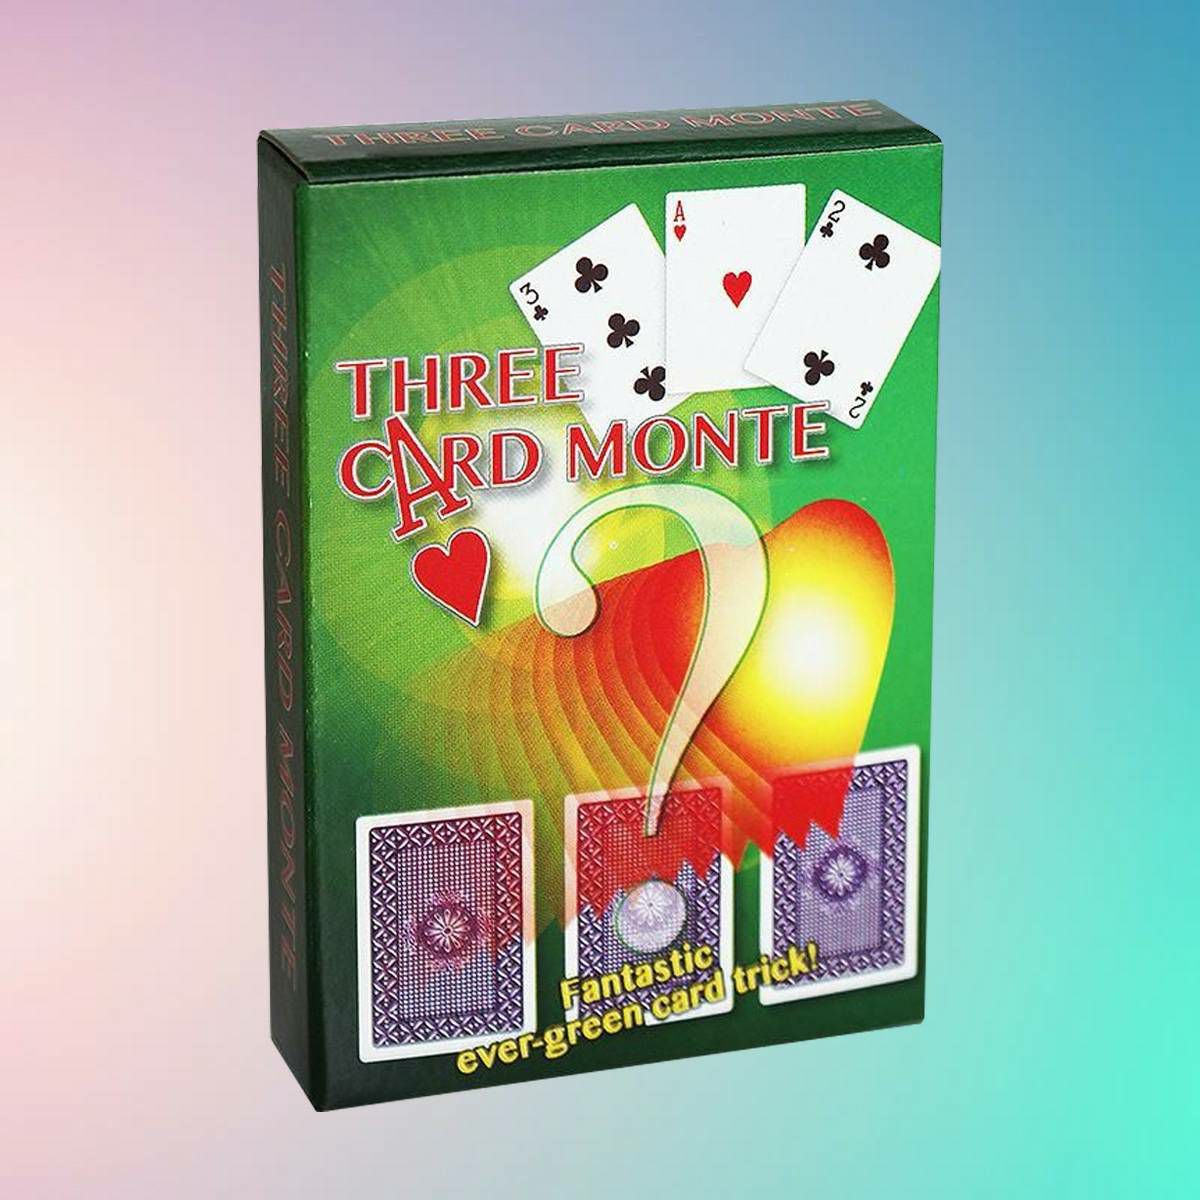 Three card monte